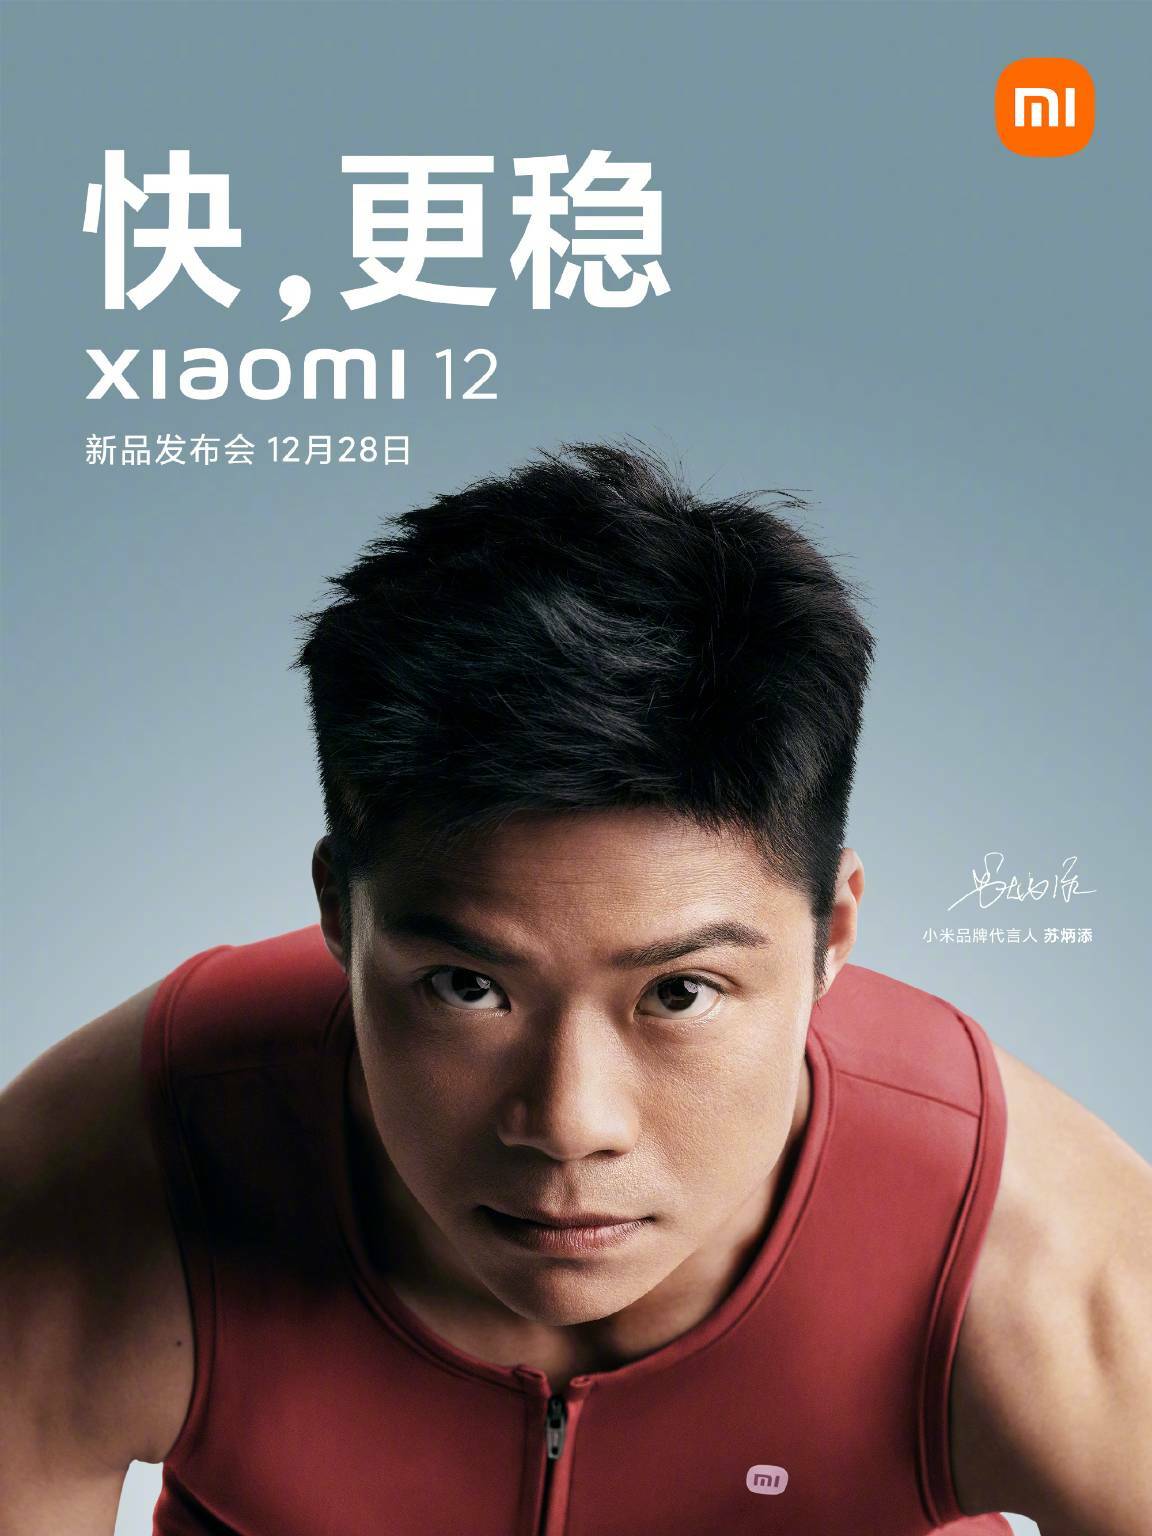 Xiaomi 12 Poster 3